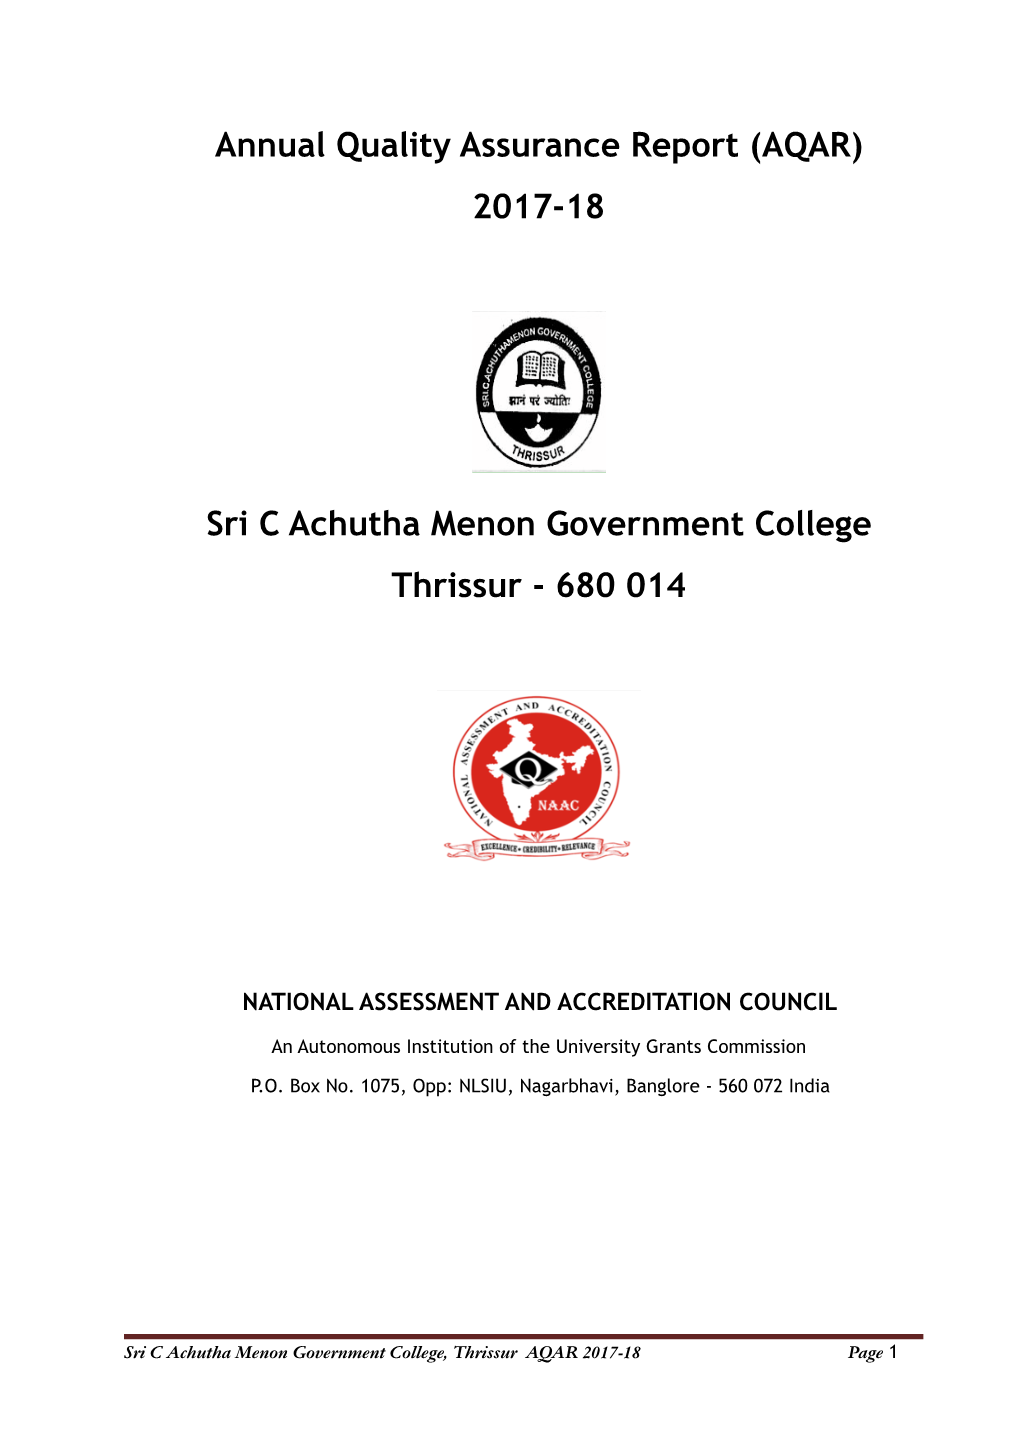 Annual Quality Assurance Report (AQAR) 2017-18 Sri C Achutha